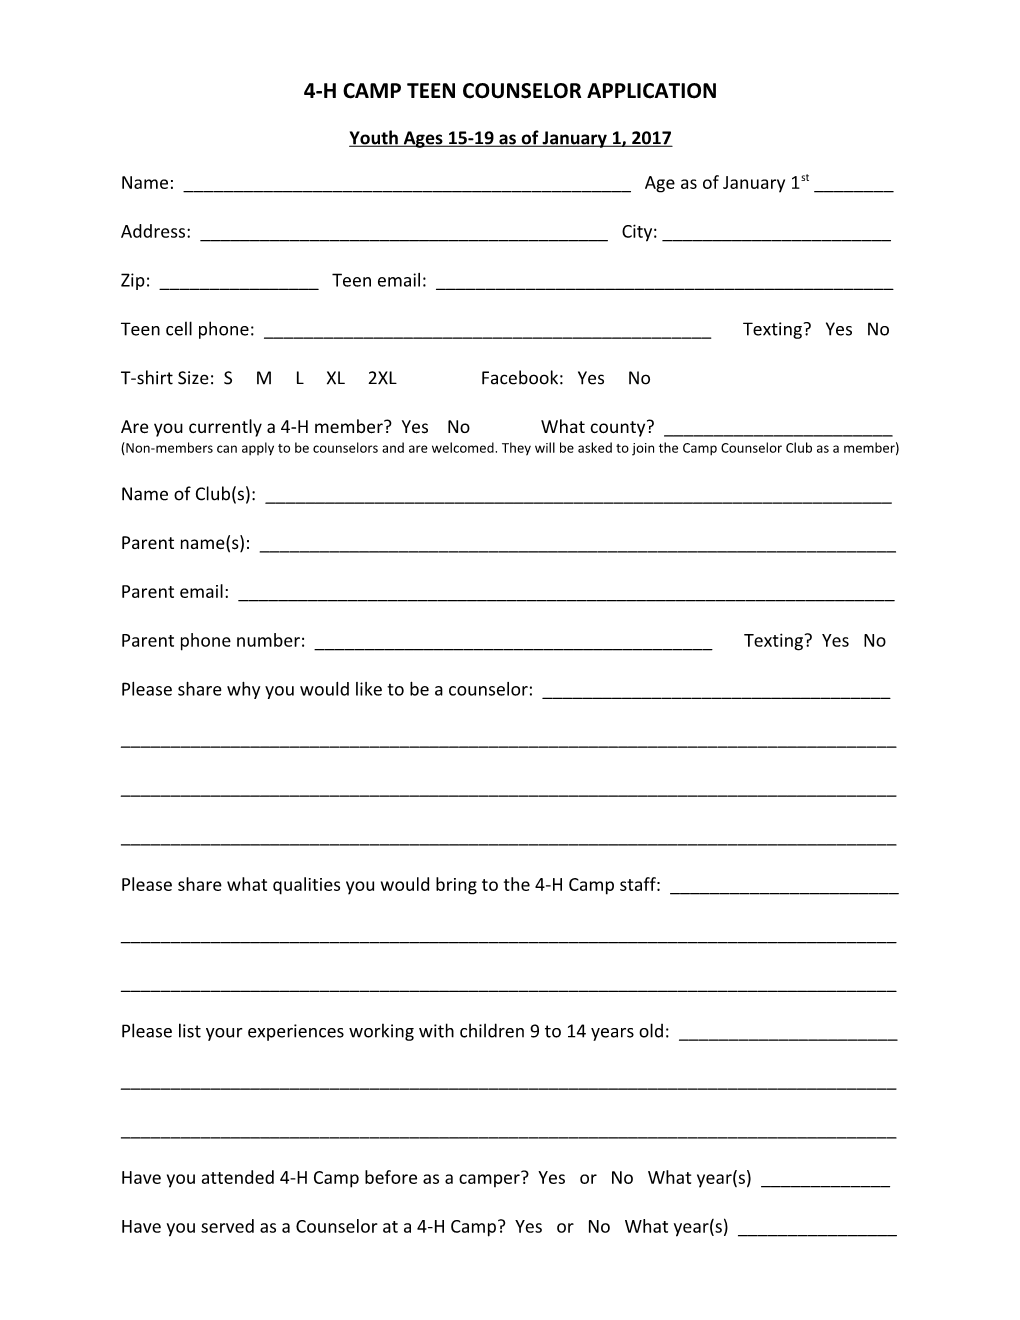 4-H Camp Teen Counselor Application